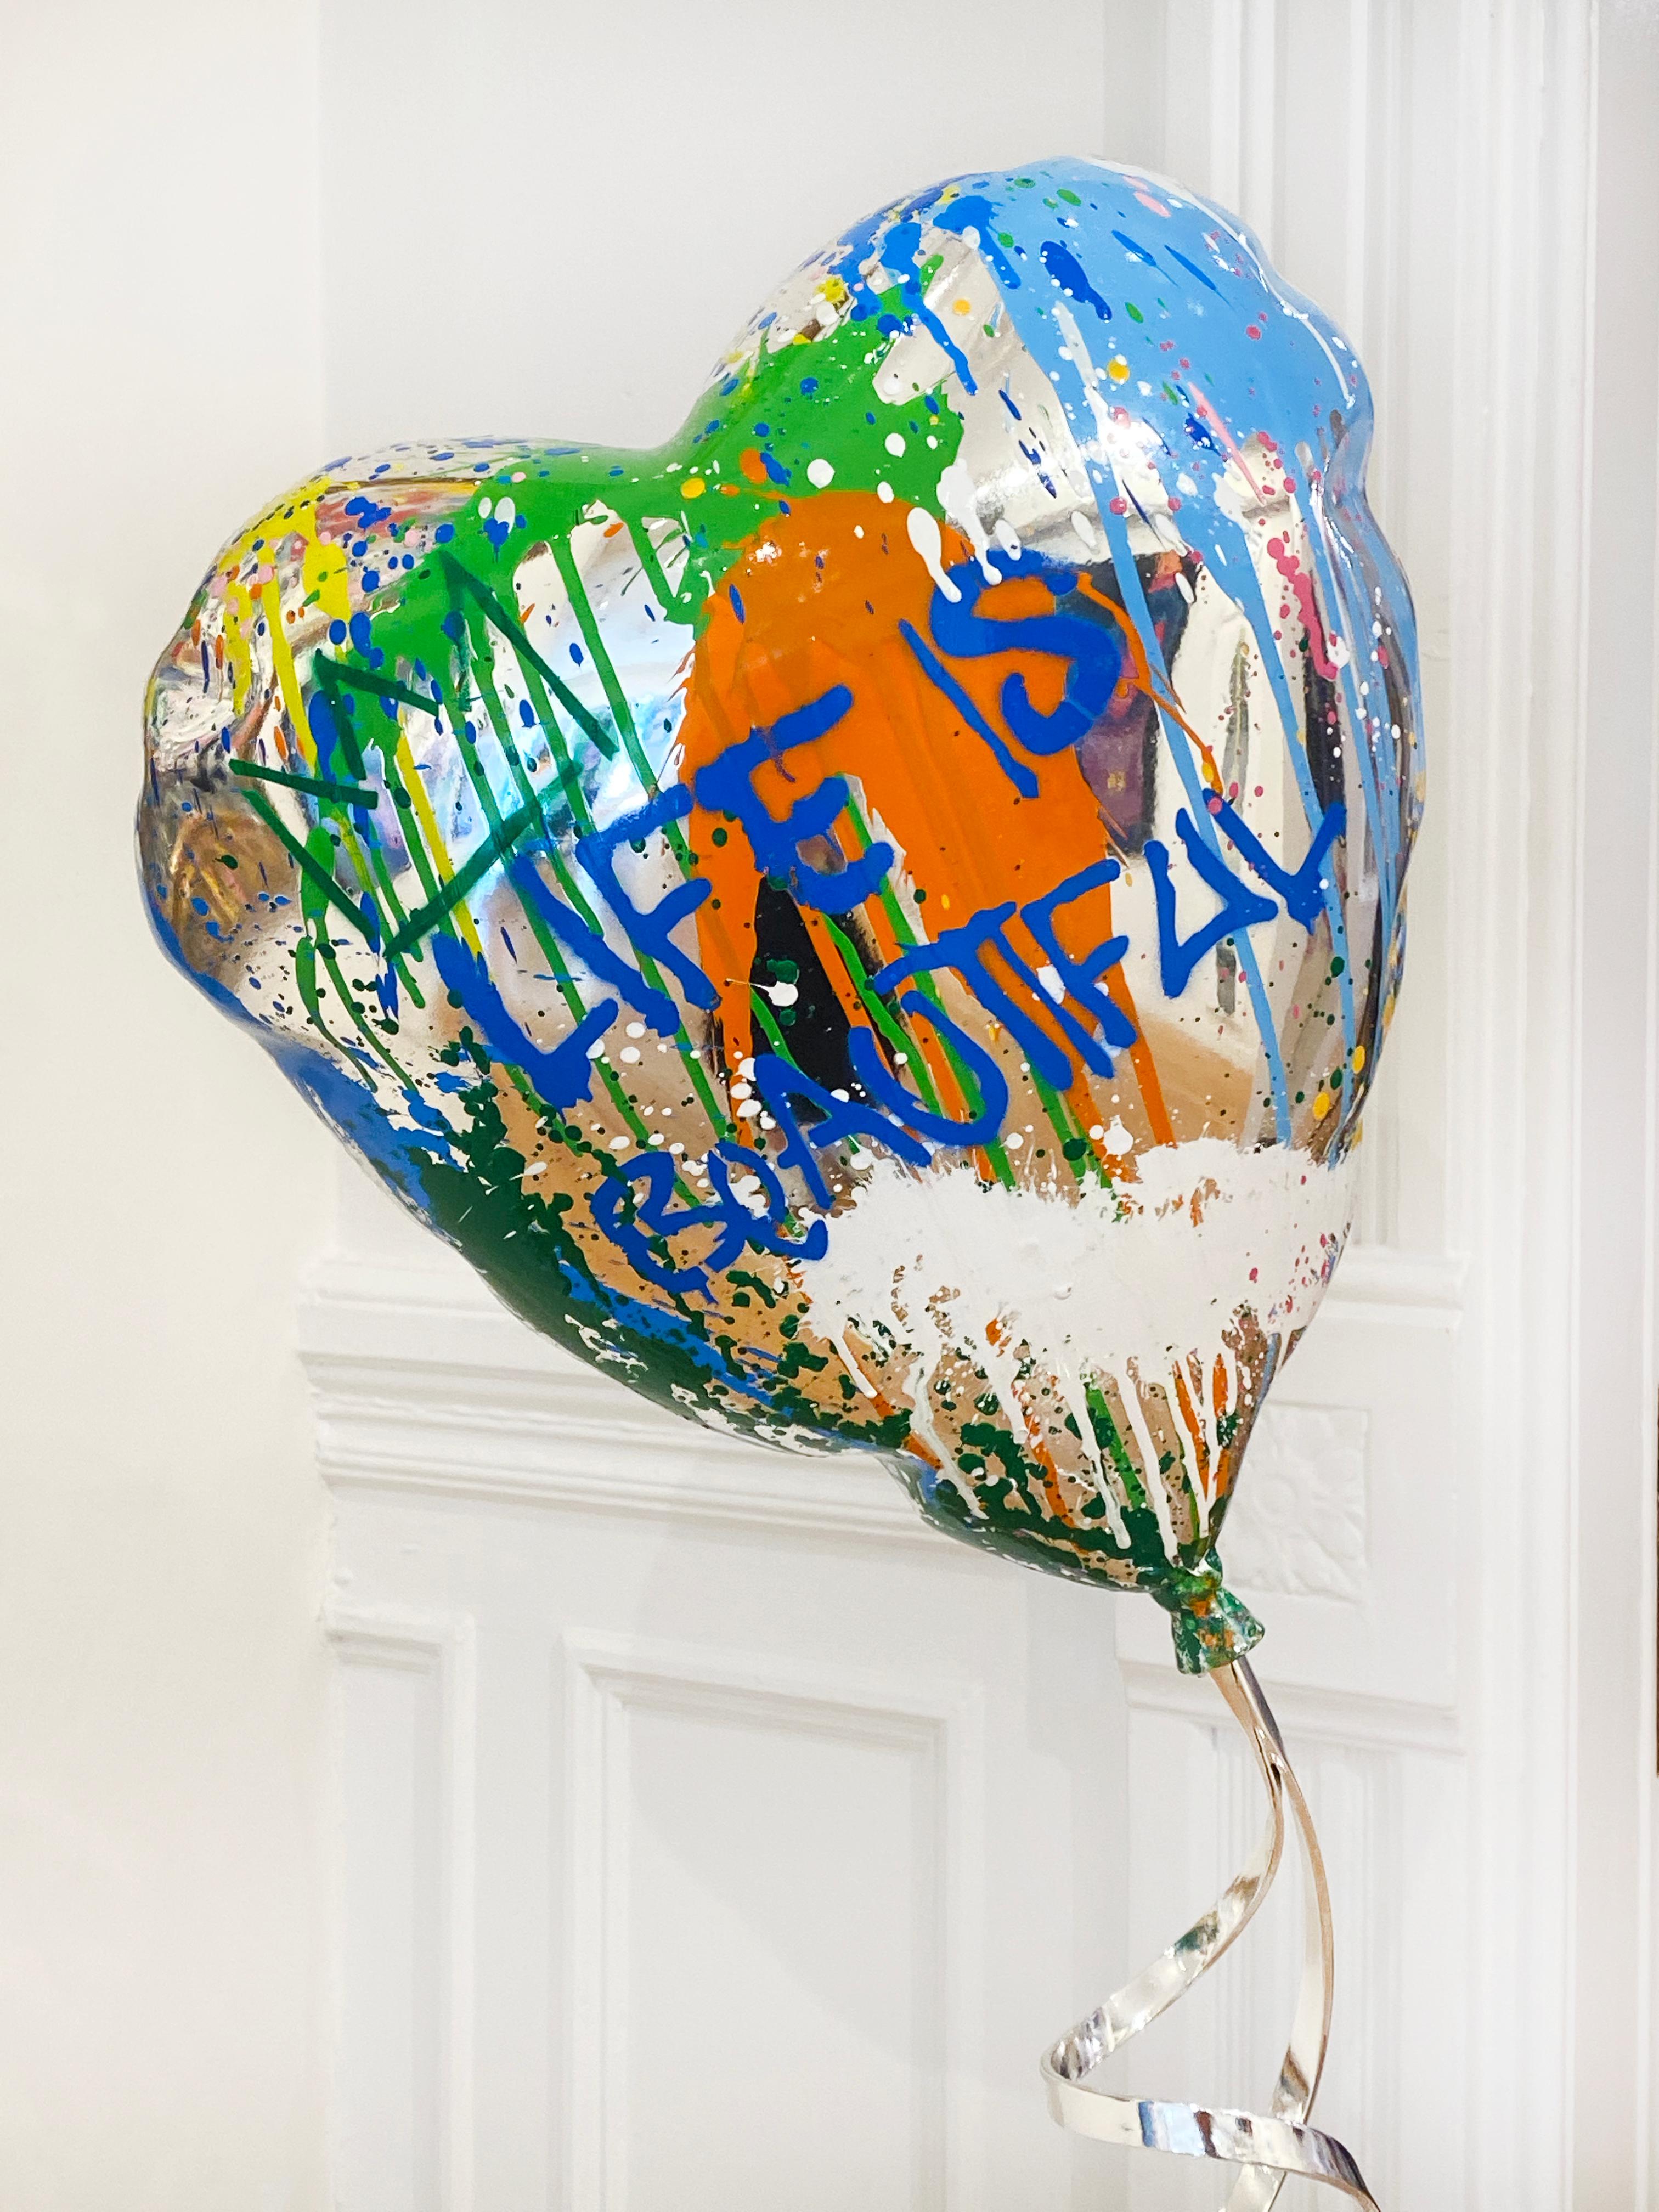 Flying Balloon Heart - Street Art Mixed Media Art by Mr. Brainwash